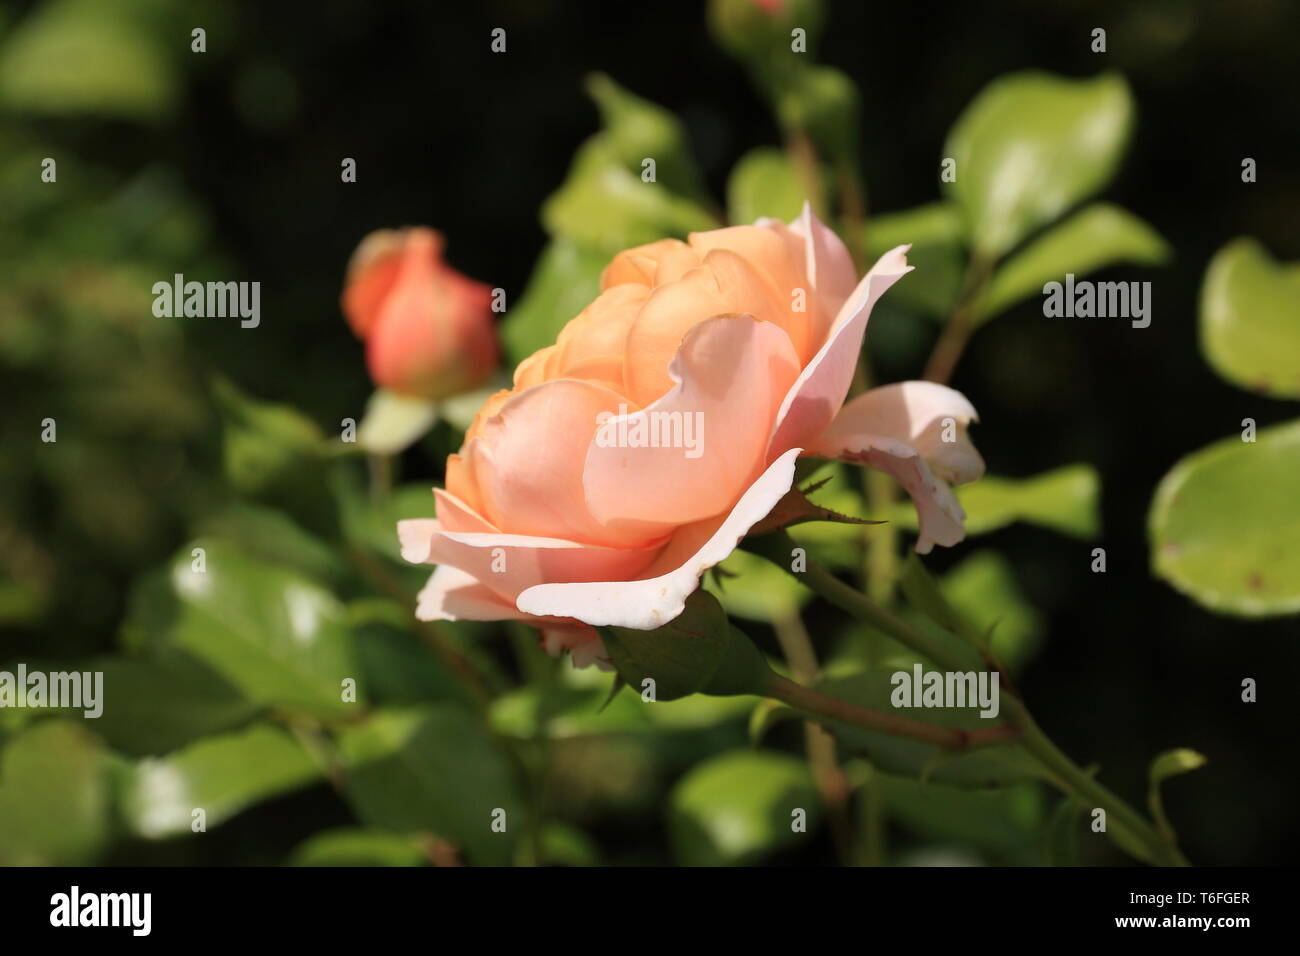 Salmon-colored rose Stock Photo